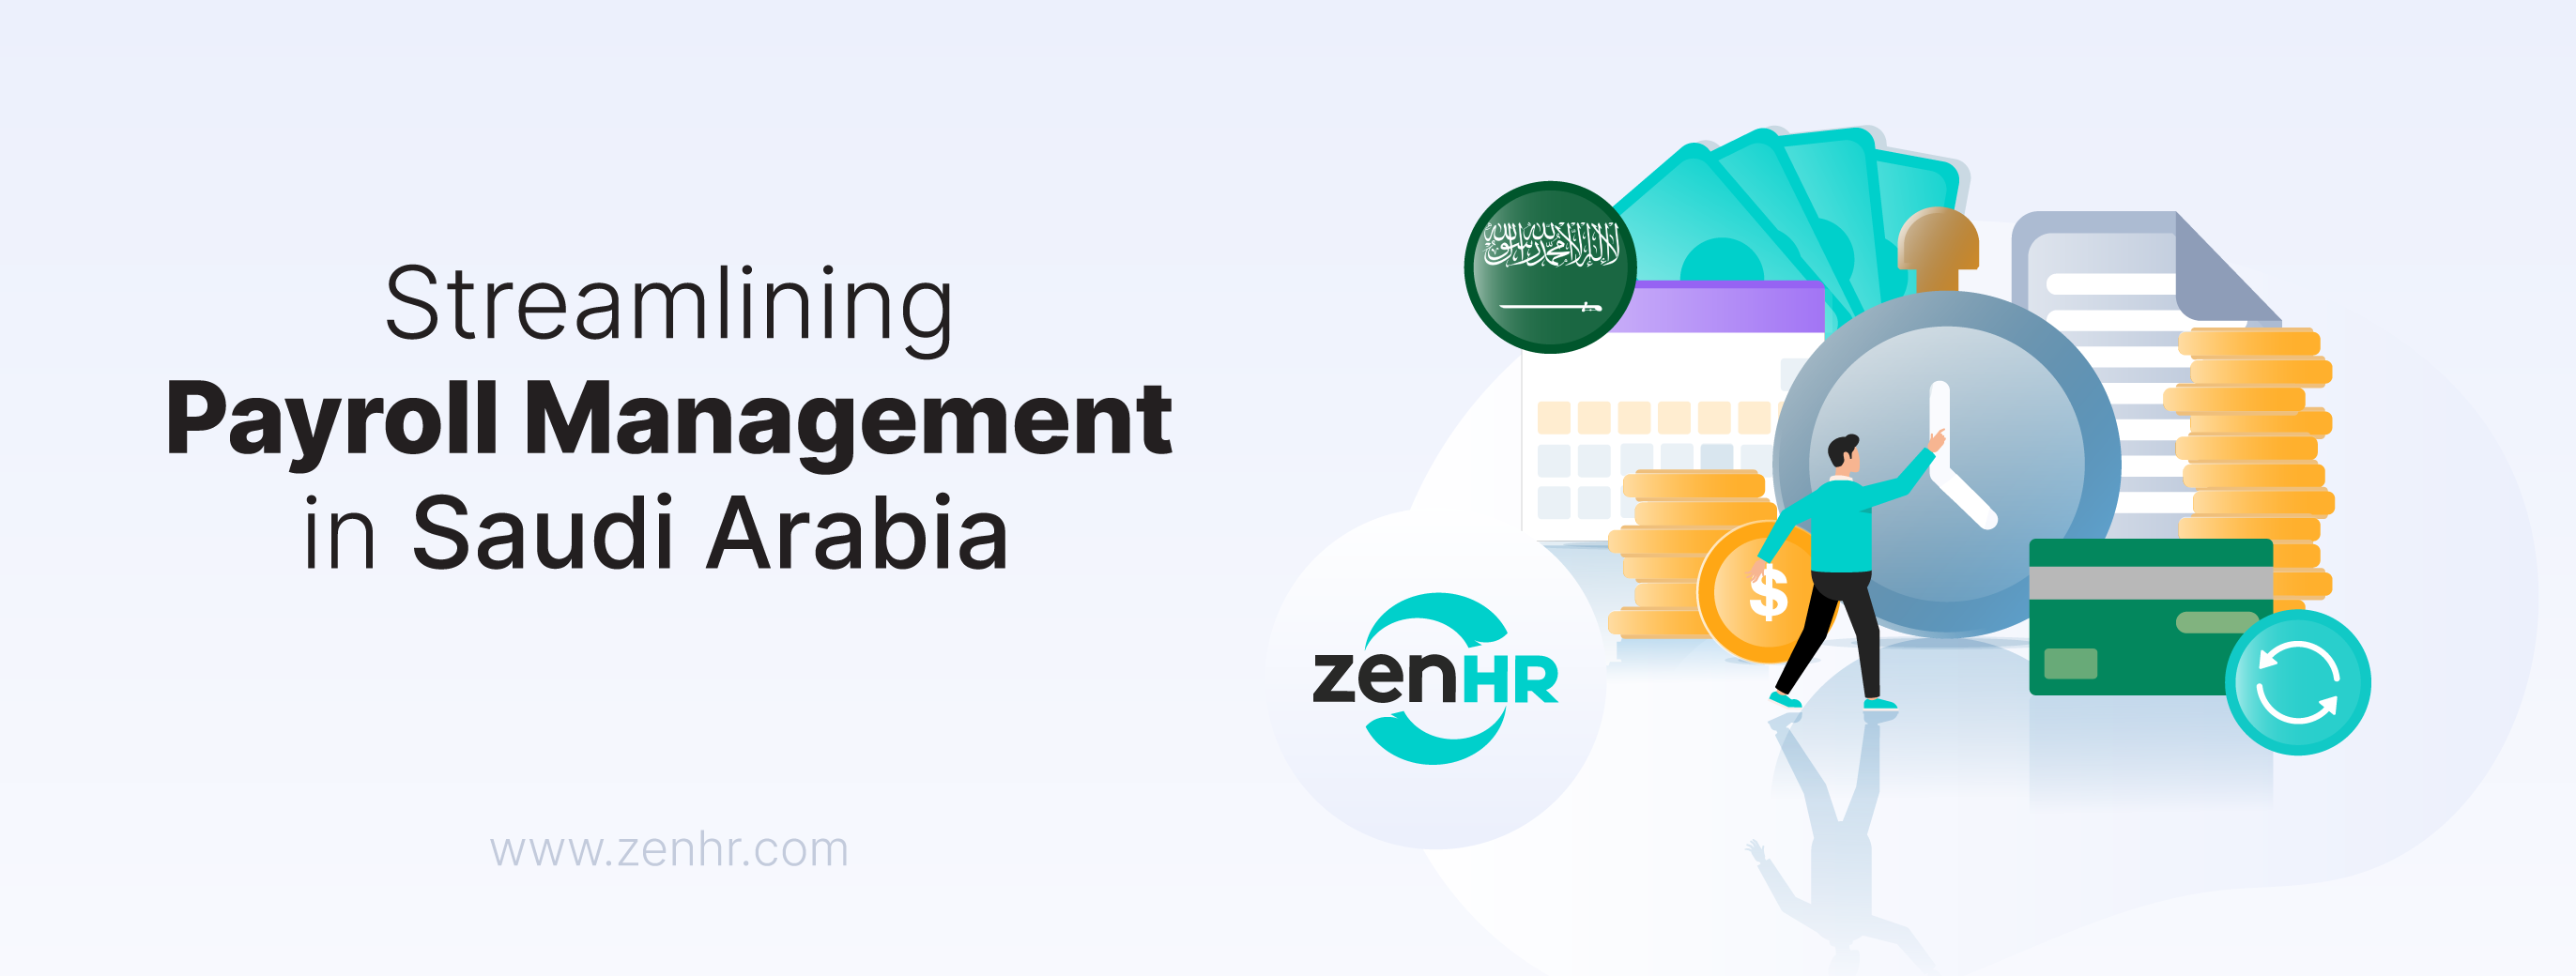 Streamlining Payroll Management in Saudi Arabia - ZenHR Whitepaper